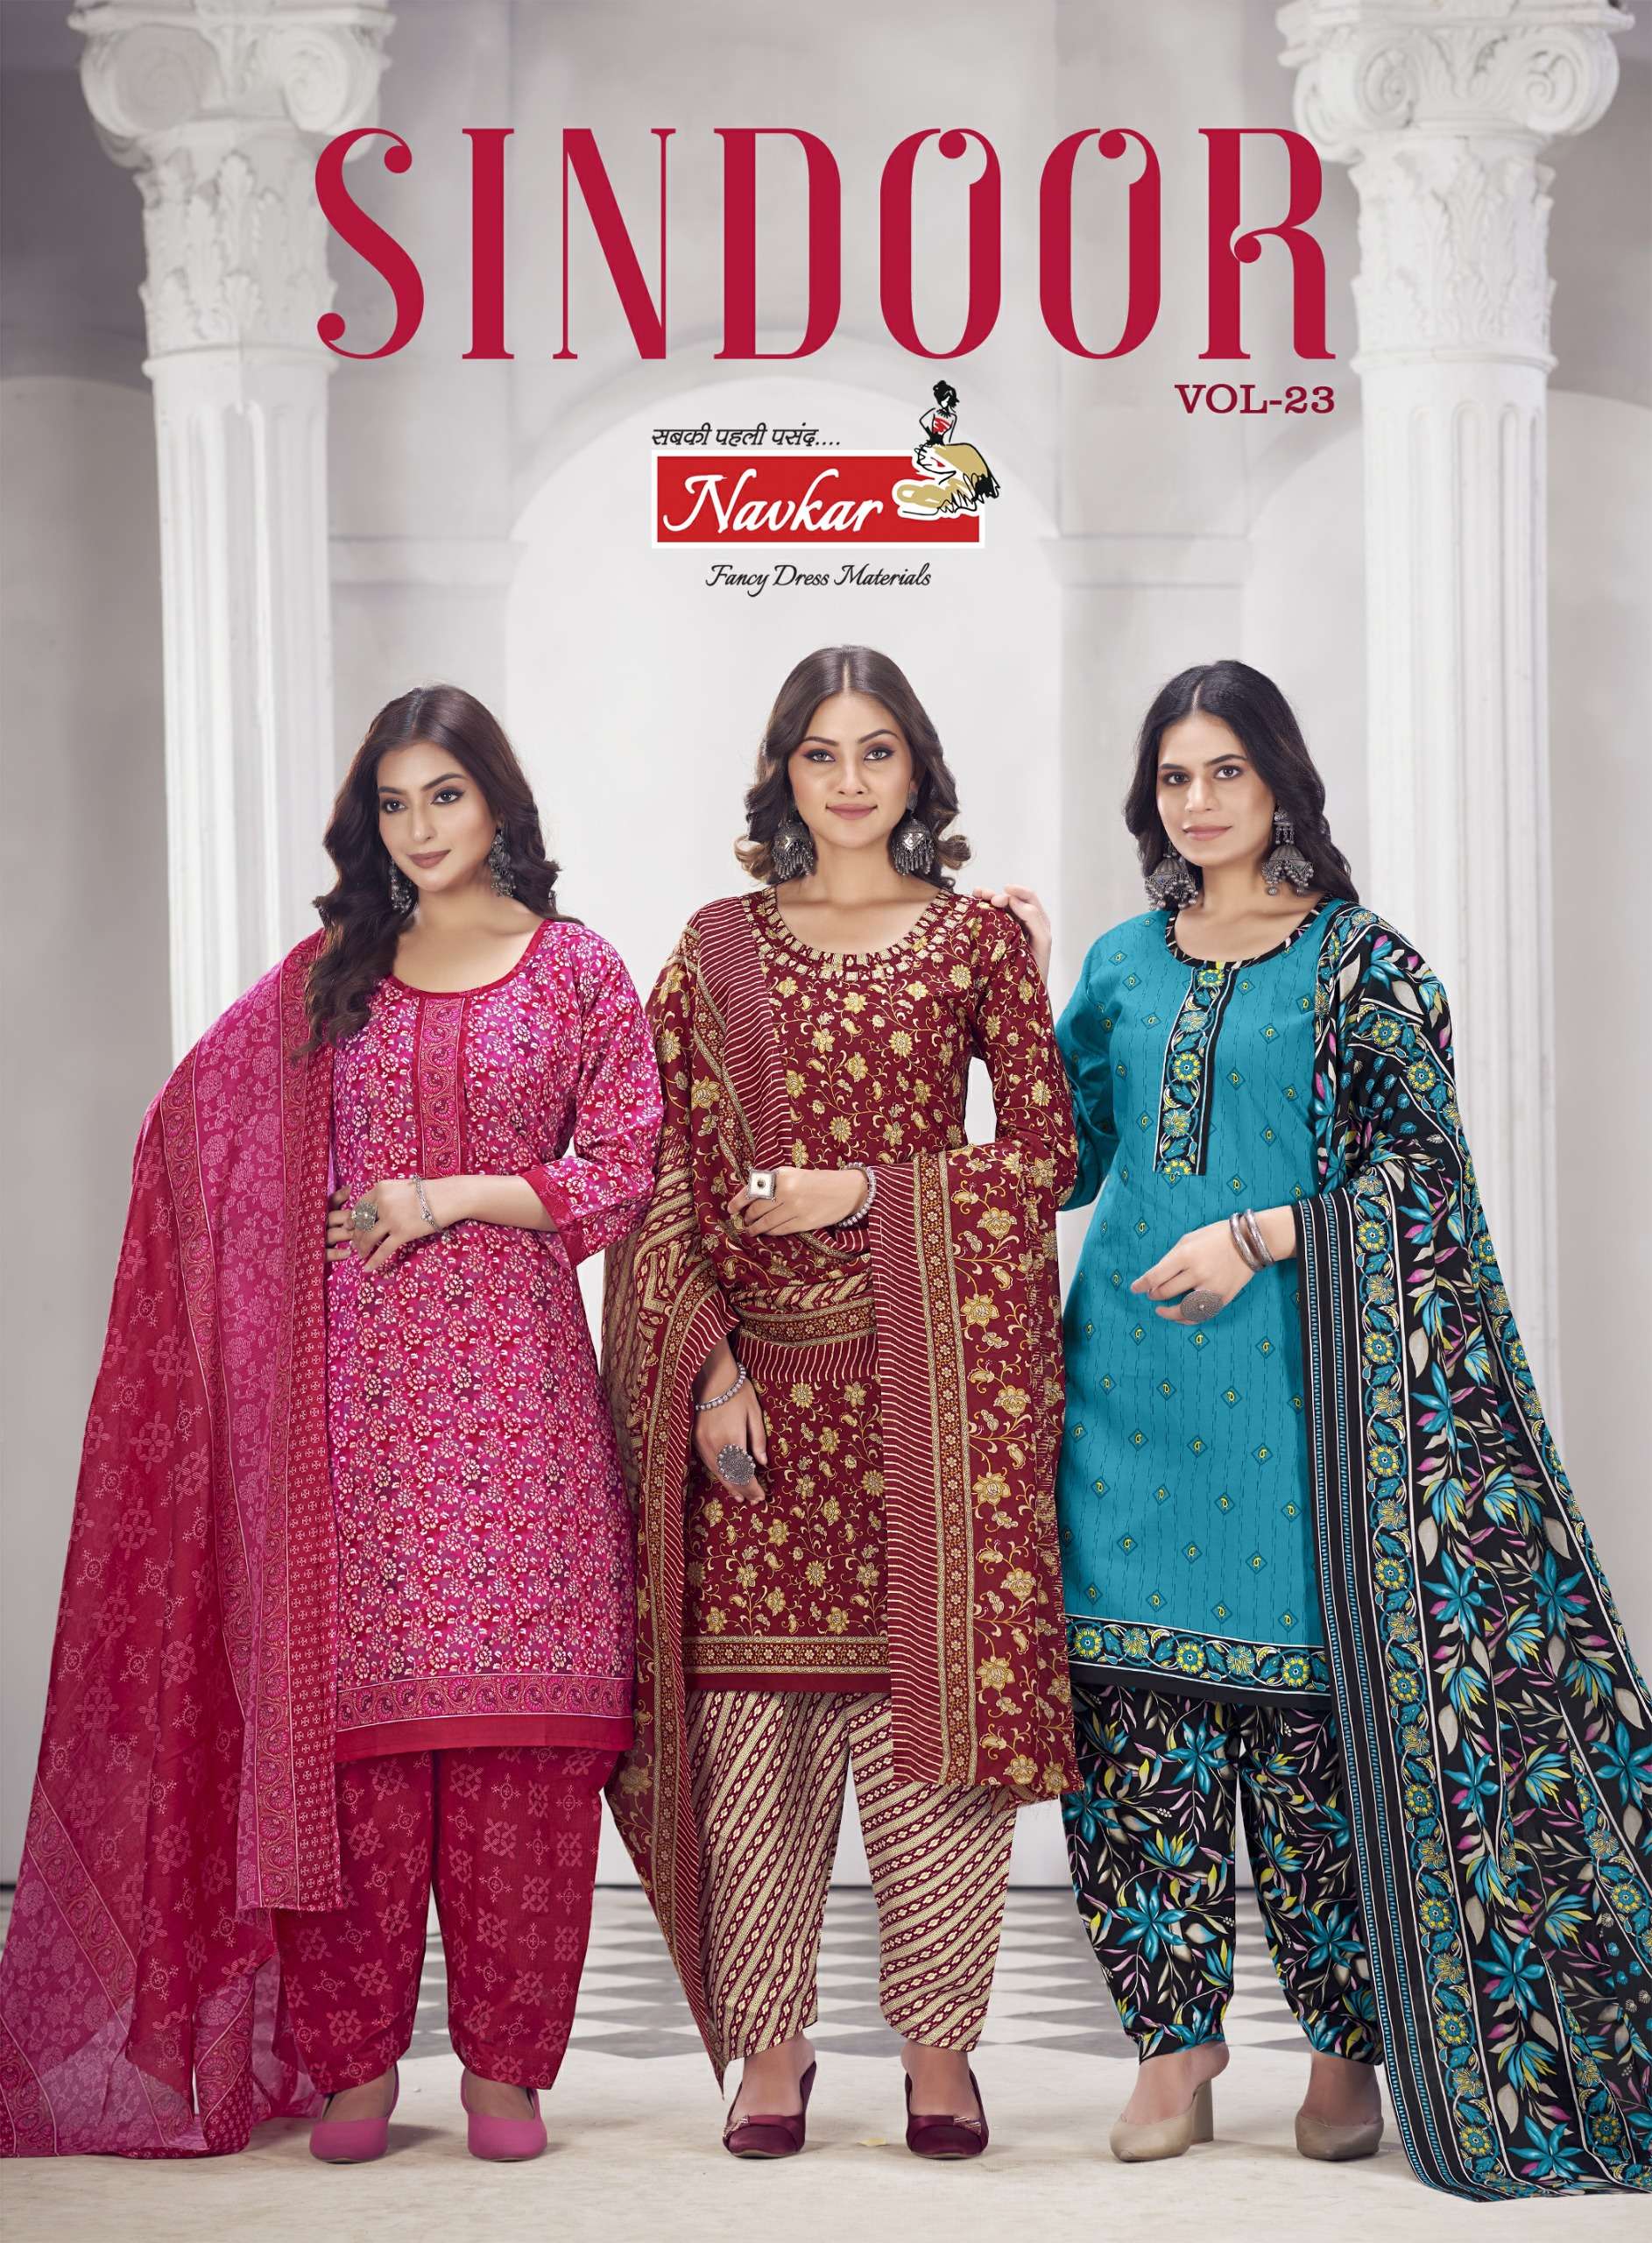 navkar sindoor vol 23 23001-23016 series designer mix cotton patiyala summer special suits buy online wholesaler surat 